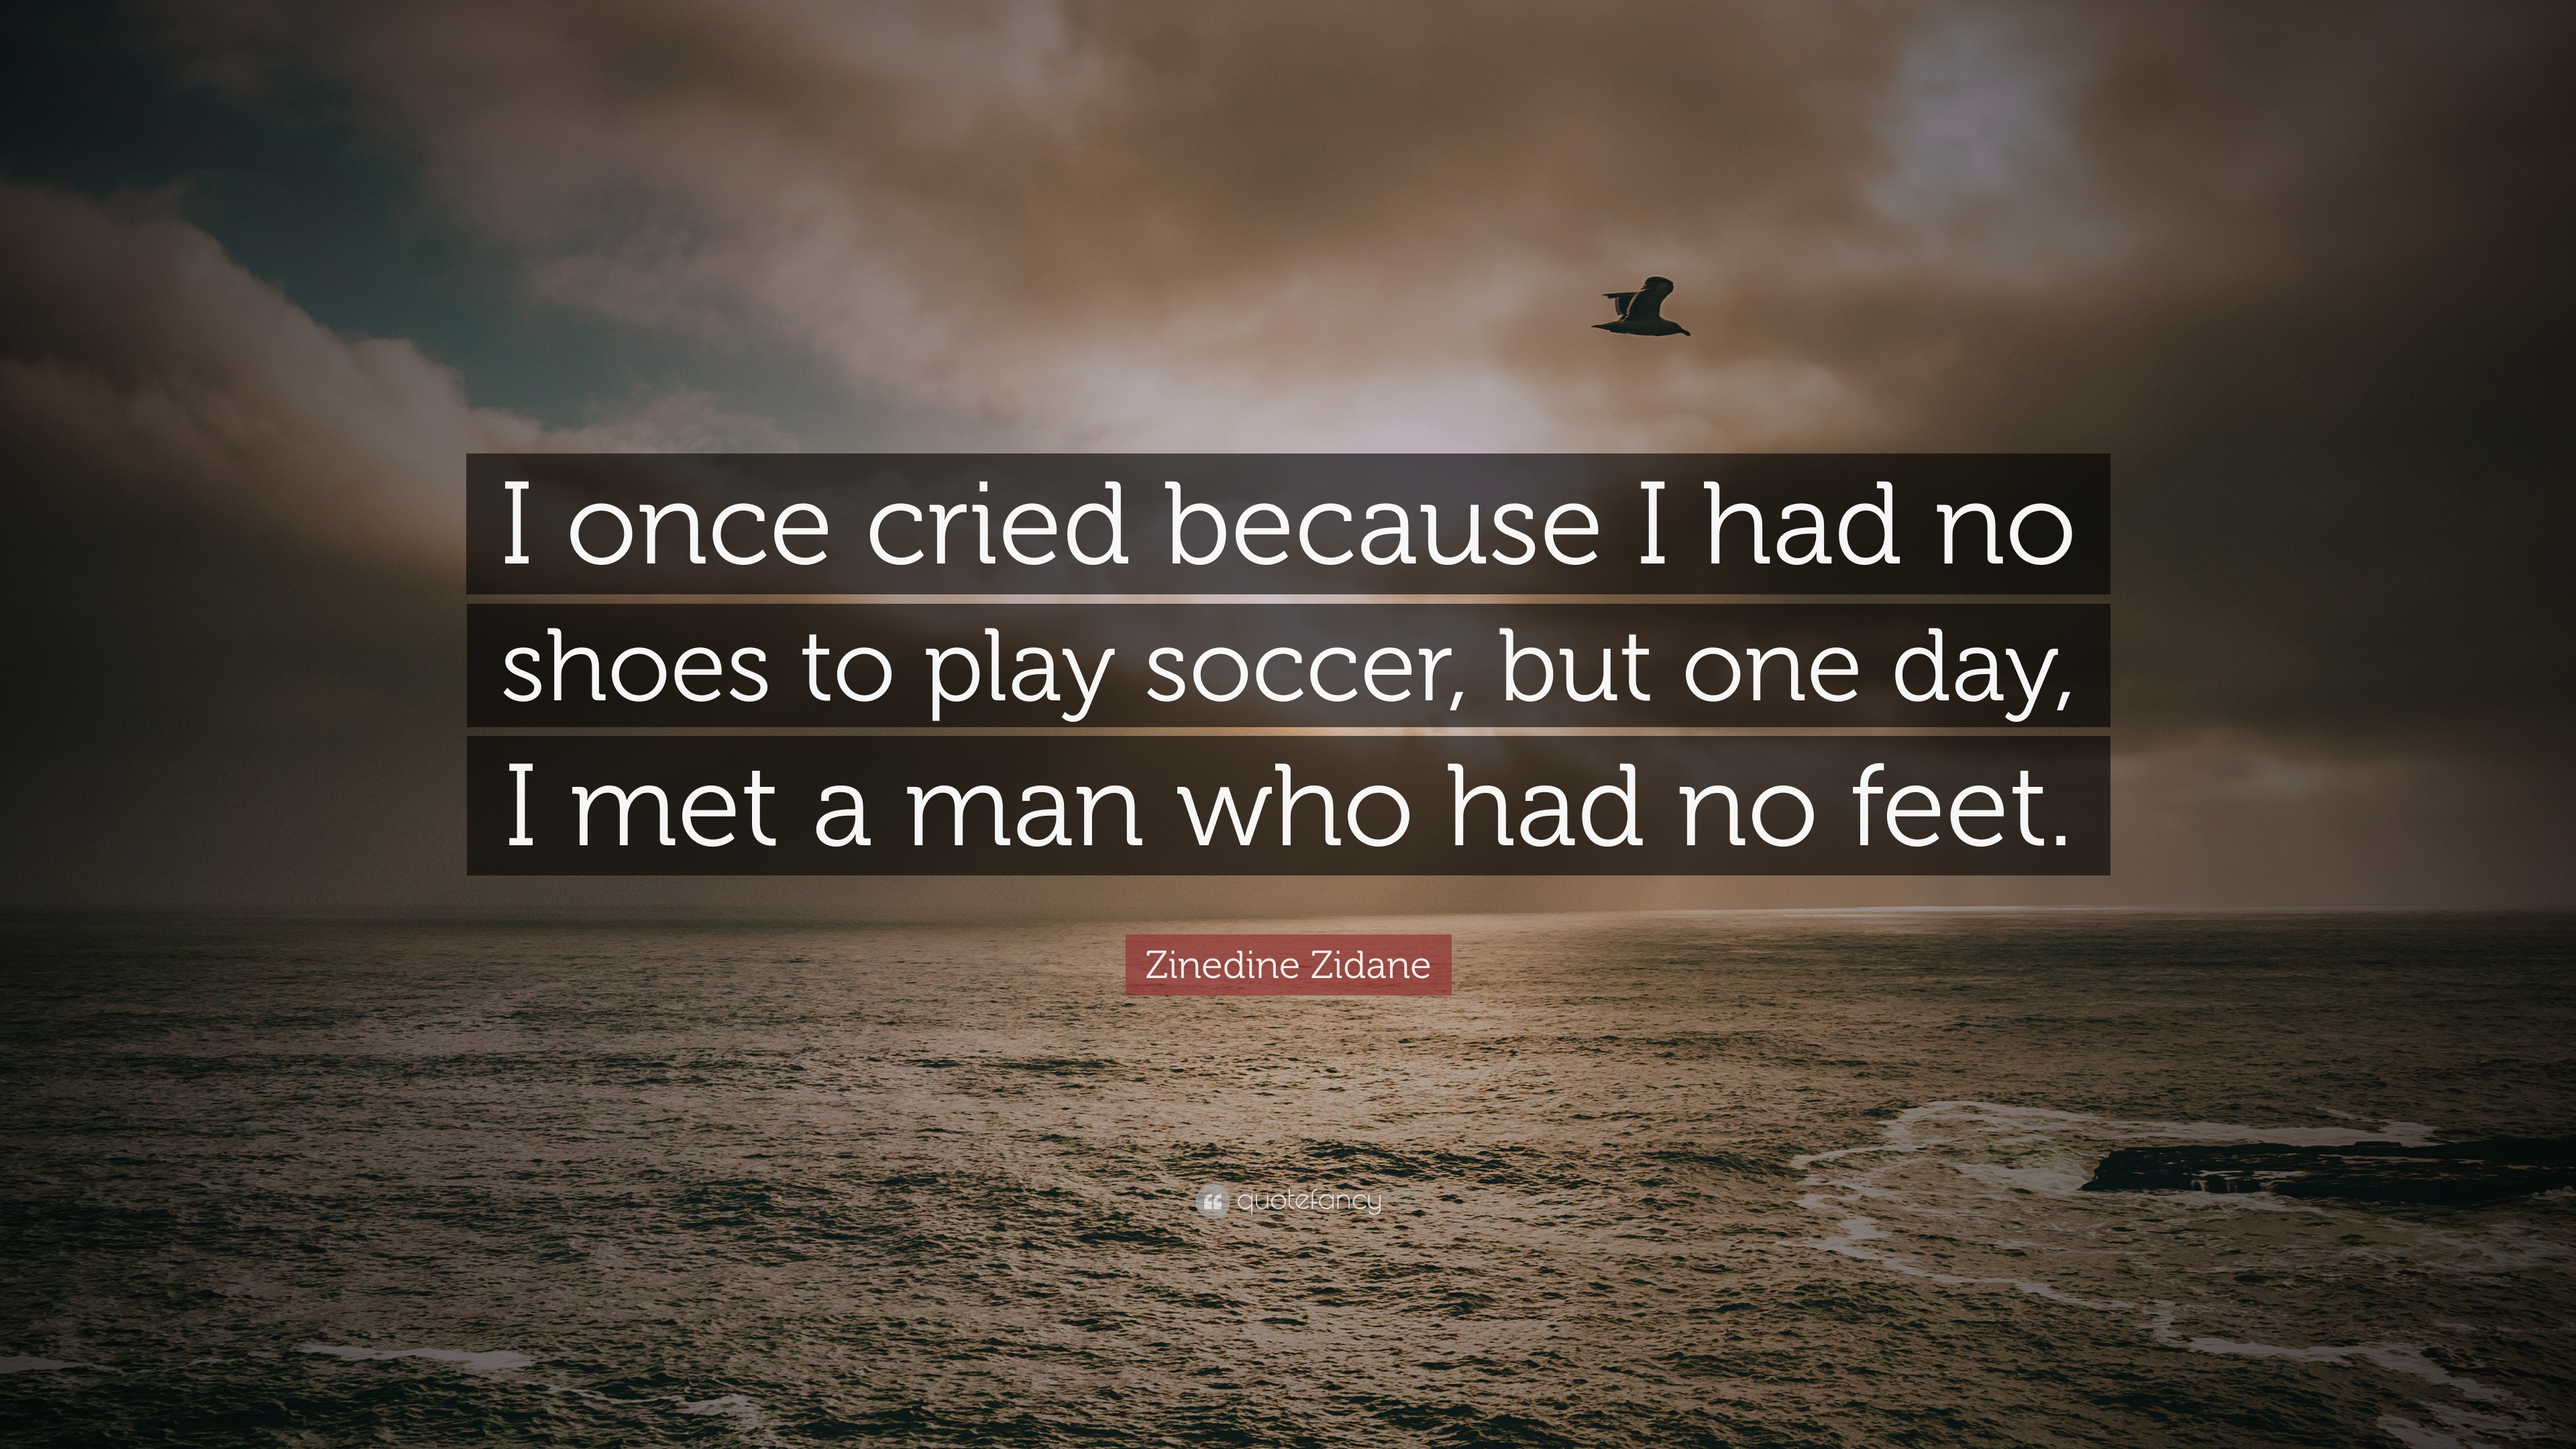 Zinedine Zidane Quote: "I once cried because I had no ...